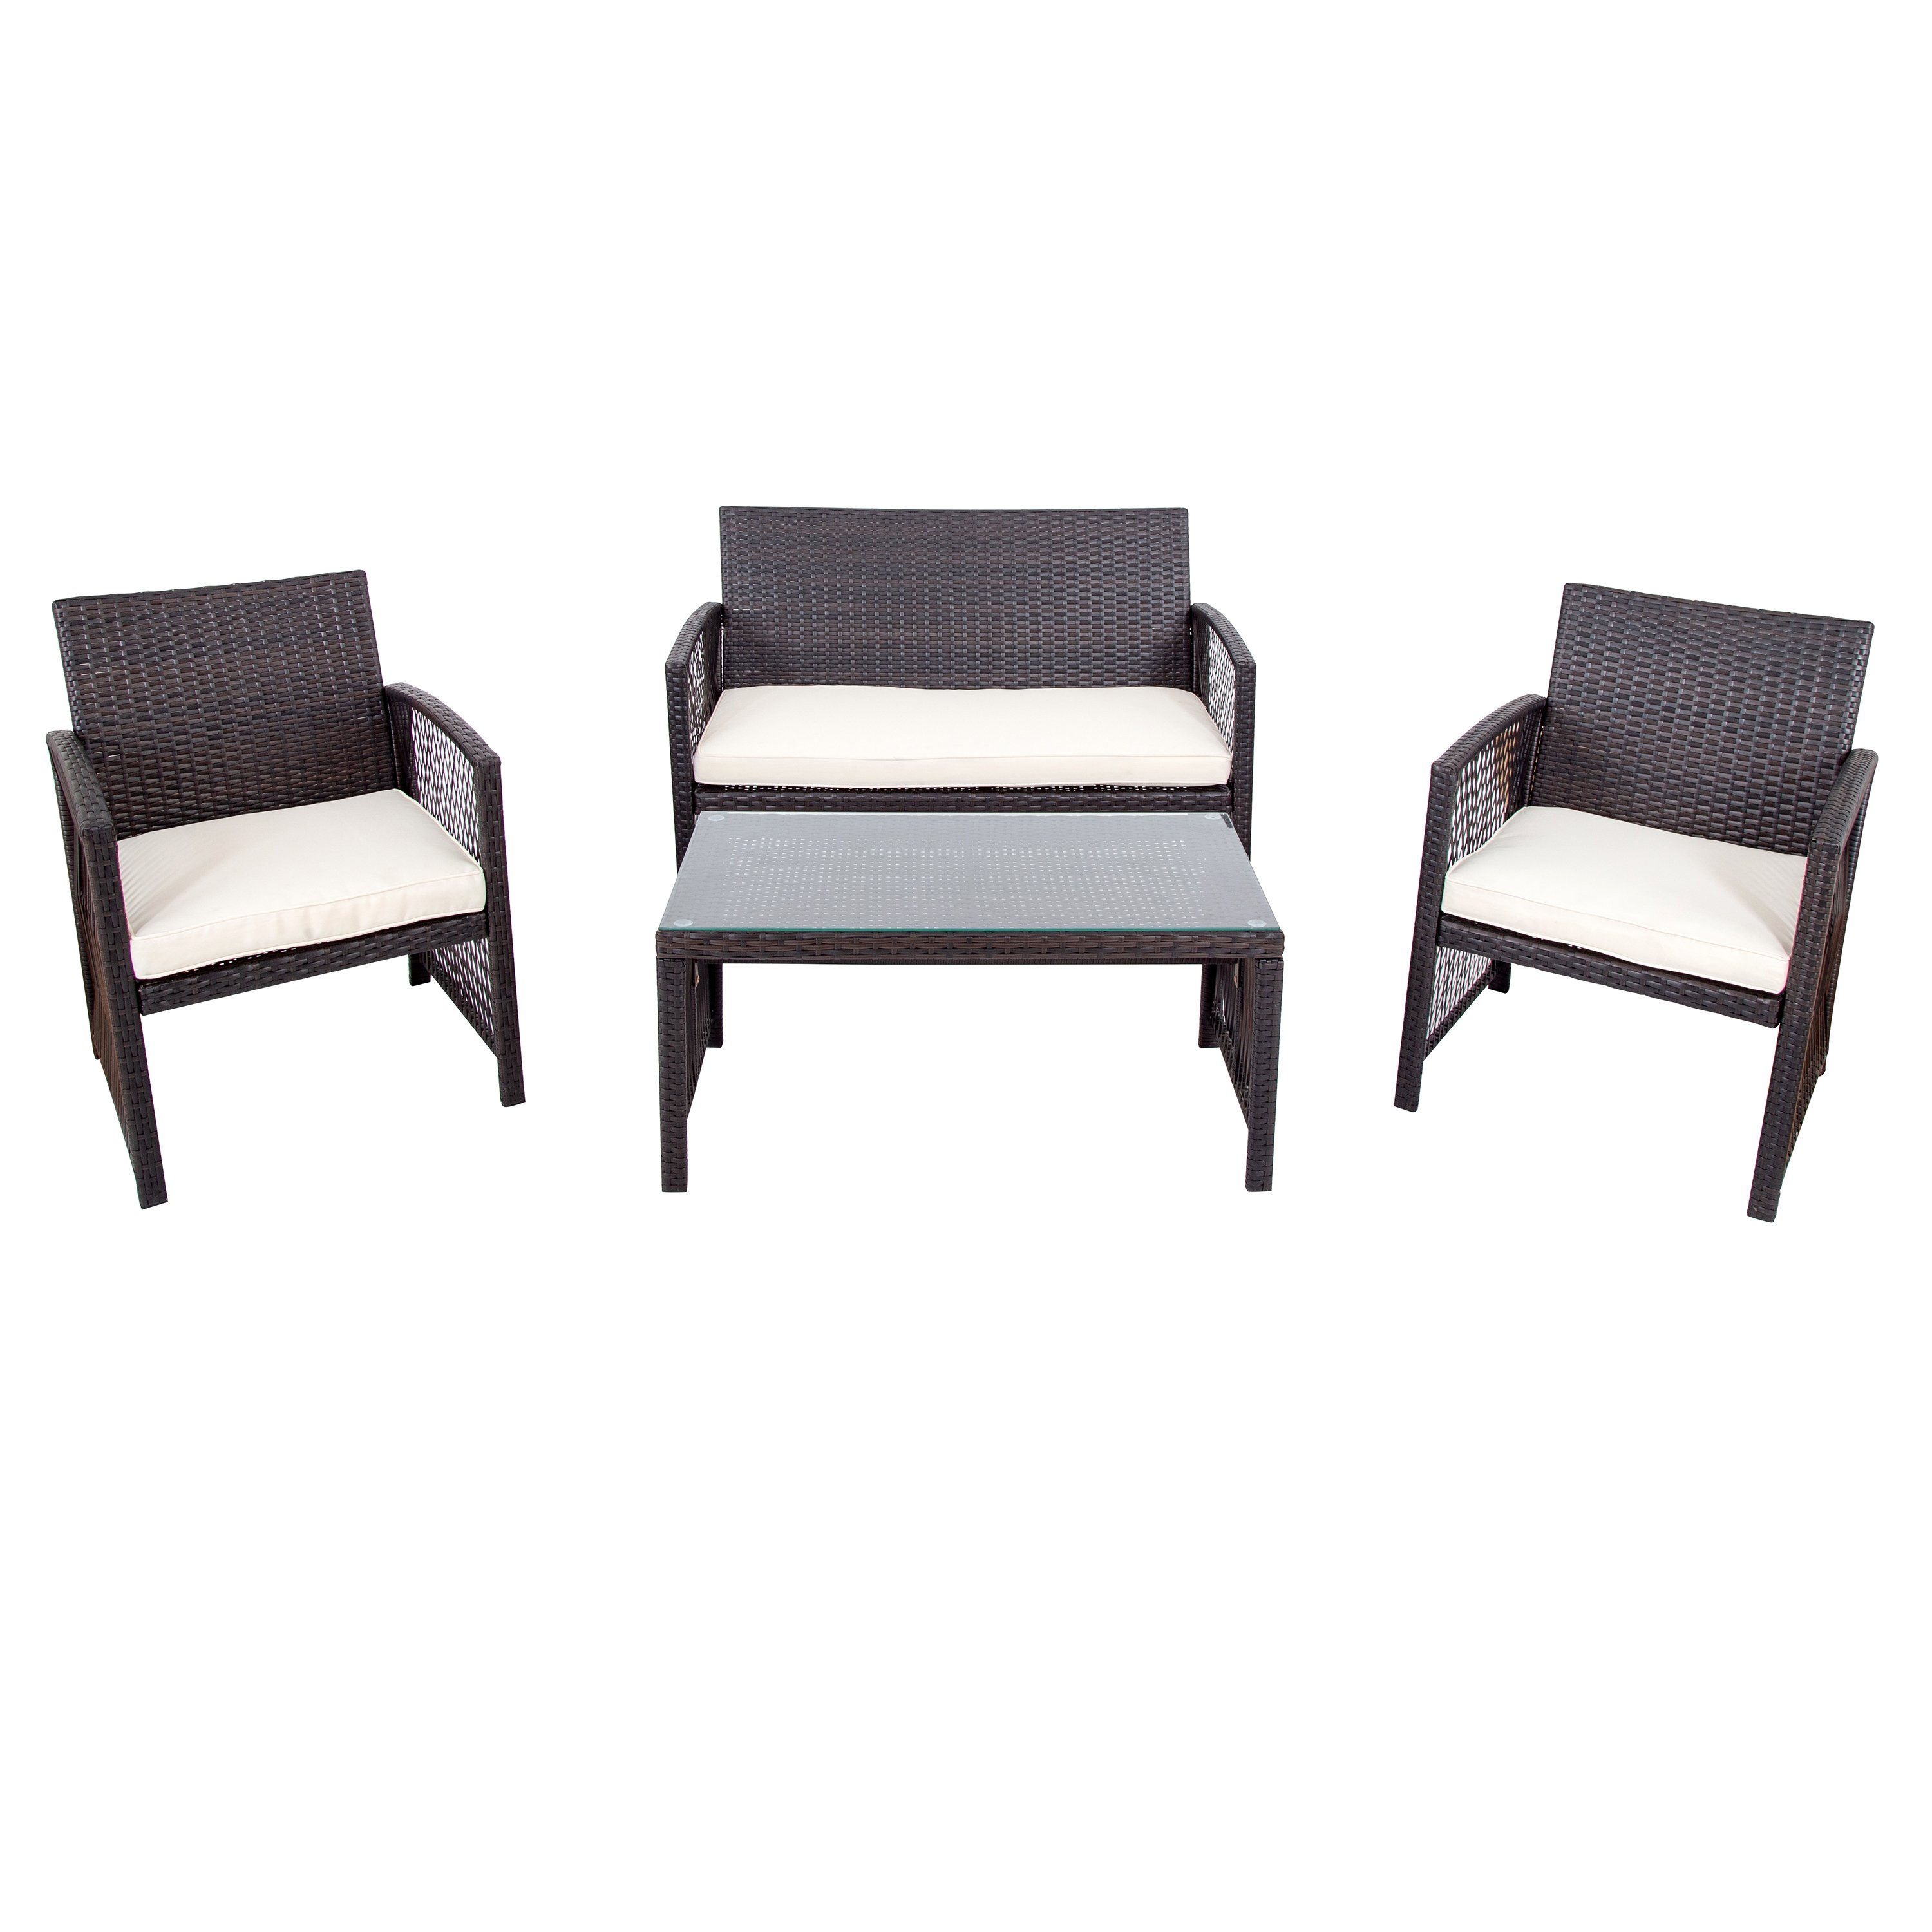  4-Piece Outdoor Furniture Rattan Chair & Table Patio Set Outdoor Sofa, Brown-CASAINC